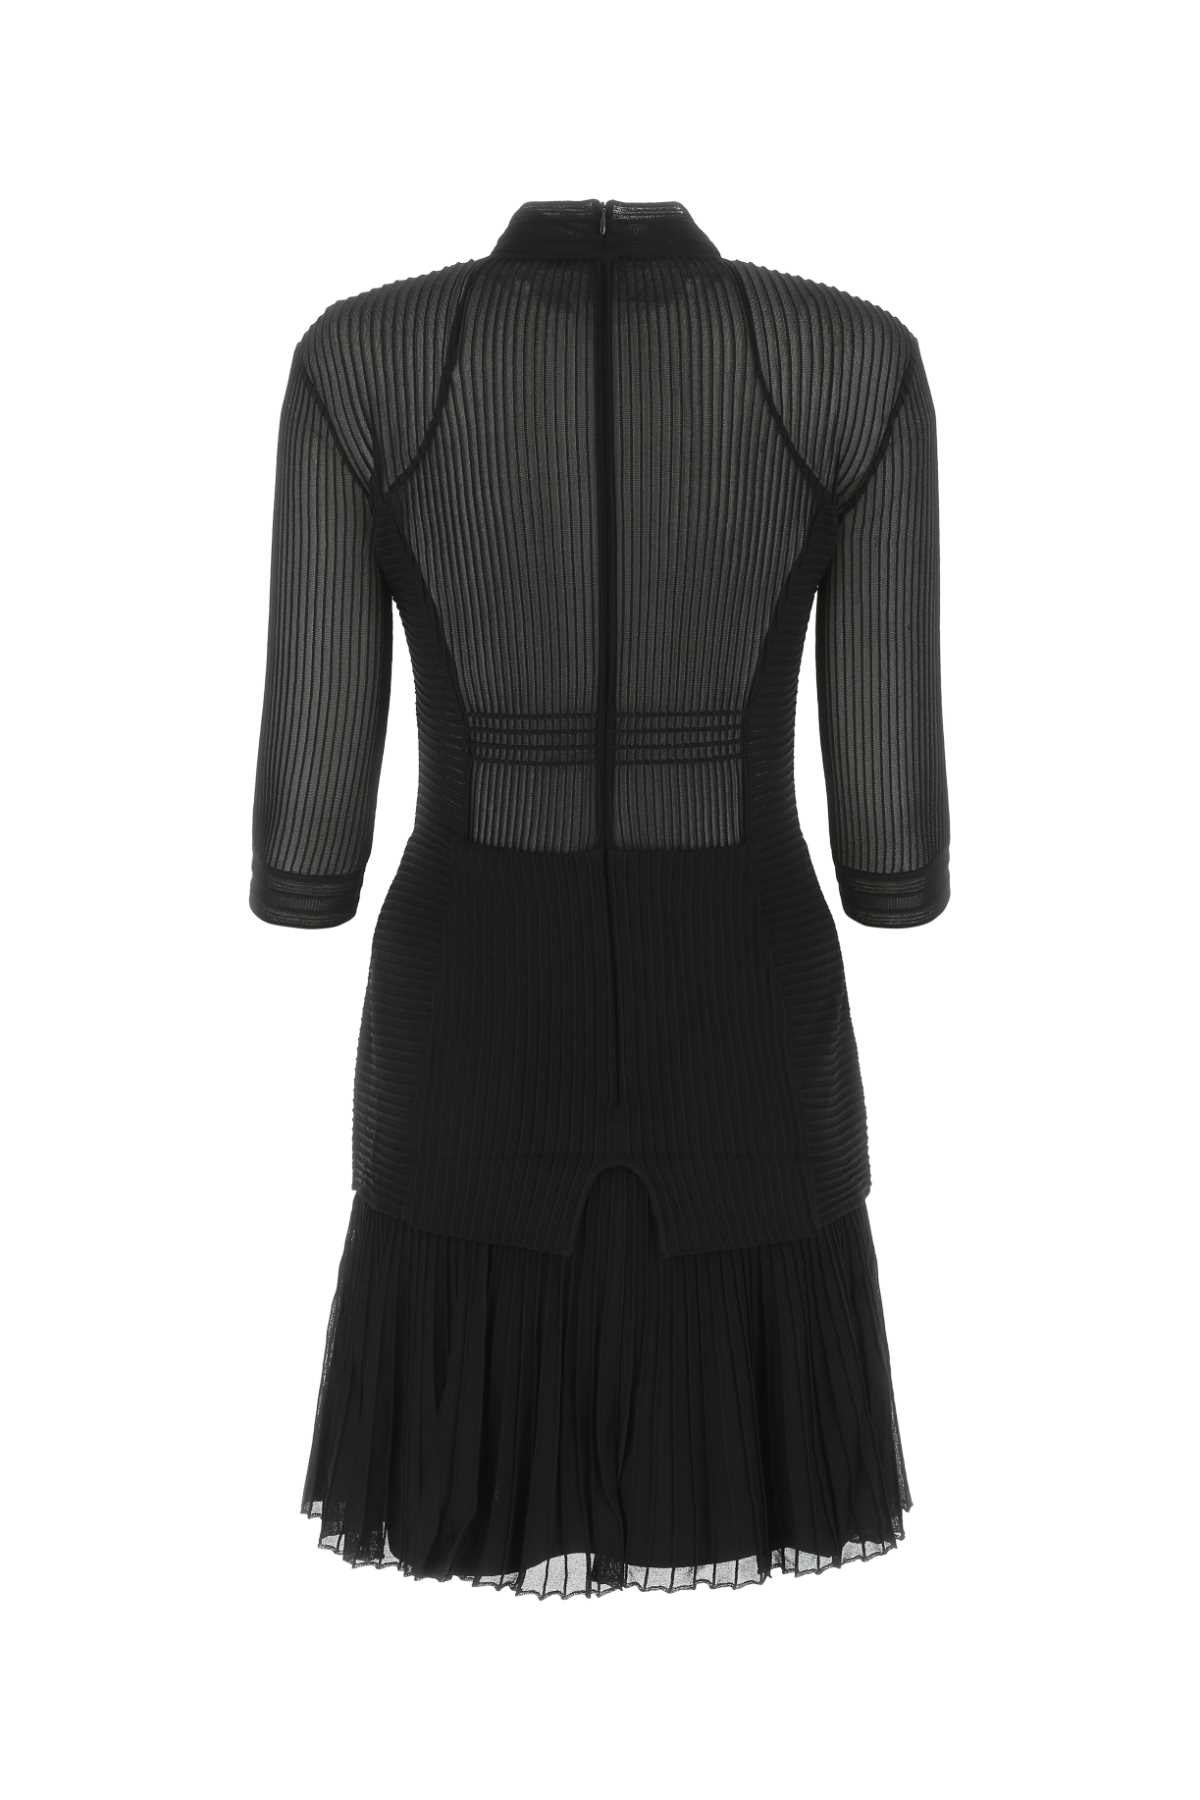 Givenchy Black Stretch Viscose Blend Mini Dress In 001